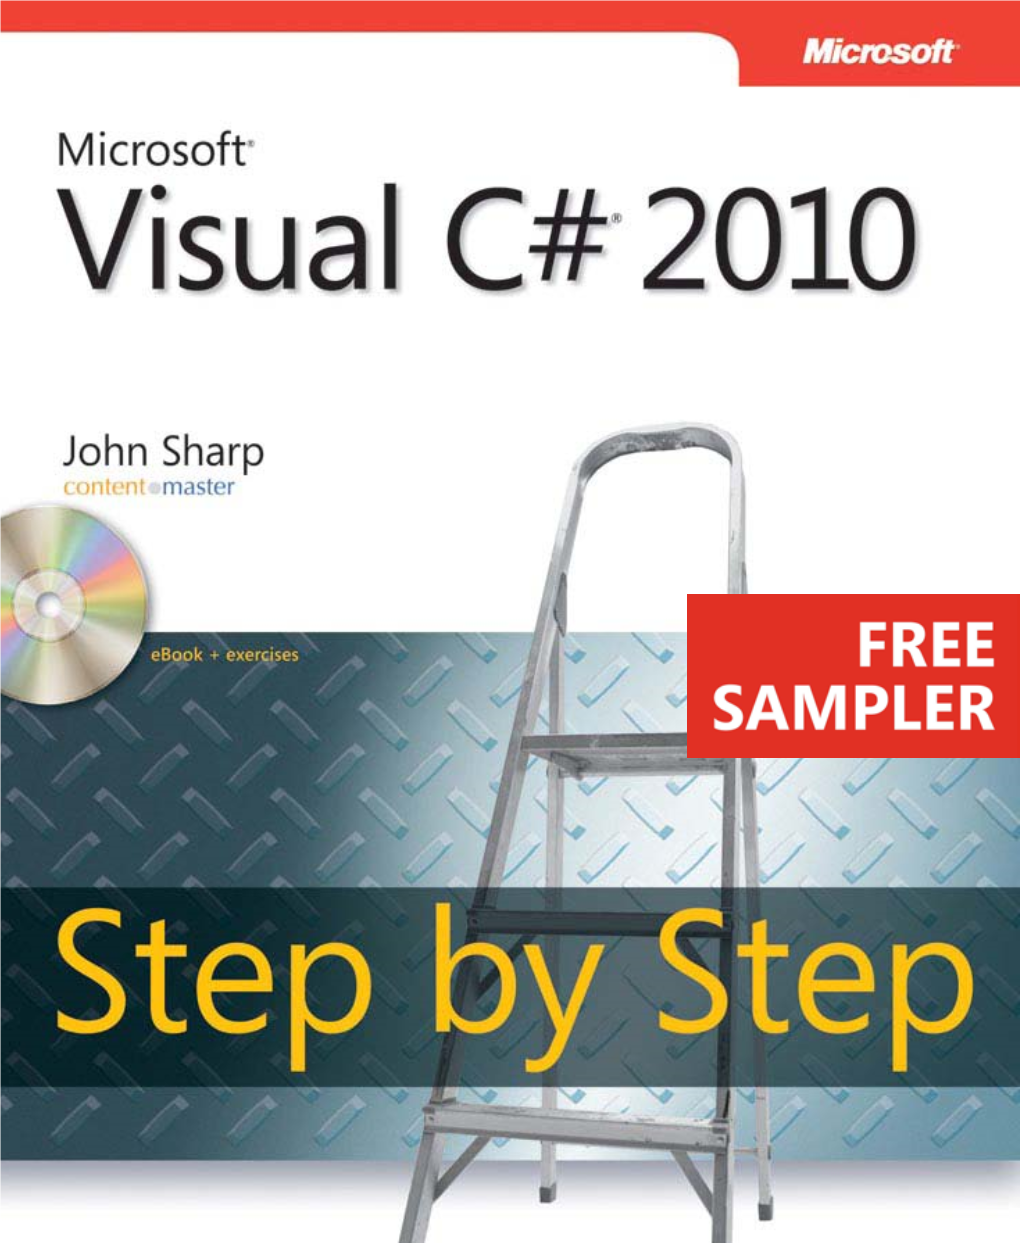 Microsoft Visual C# 2010 Step by Step Ebook